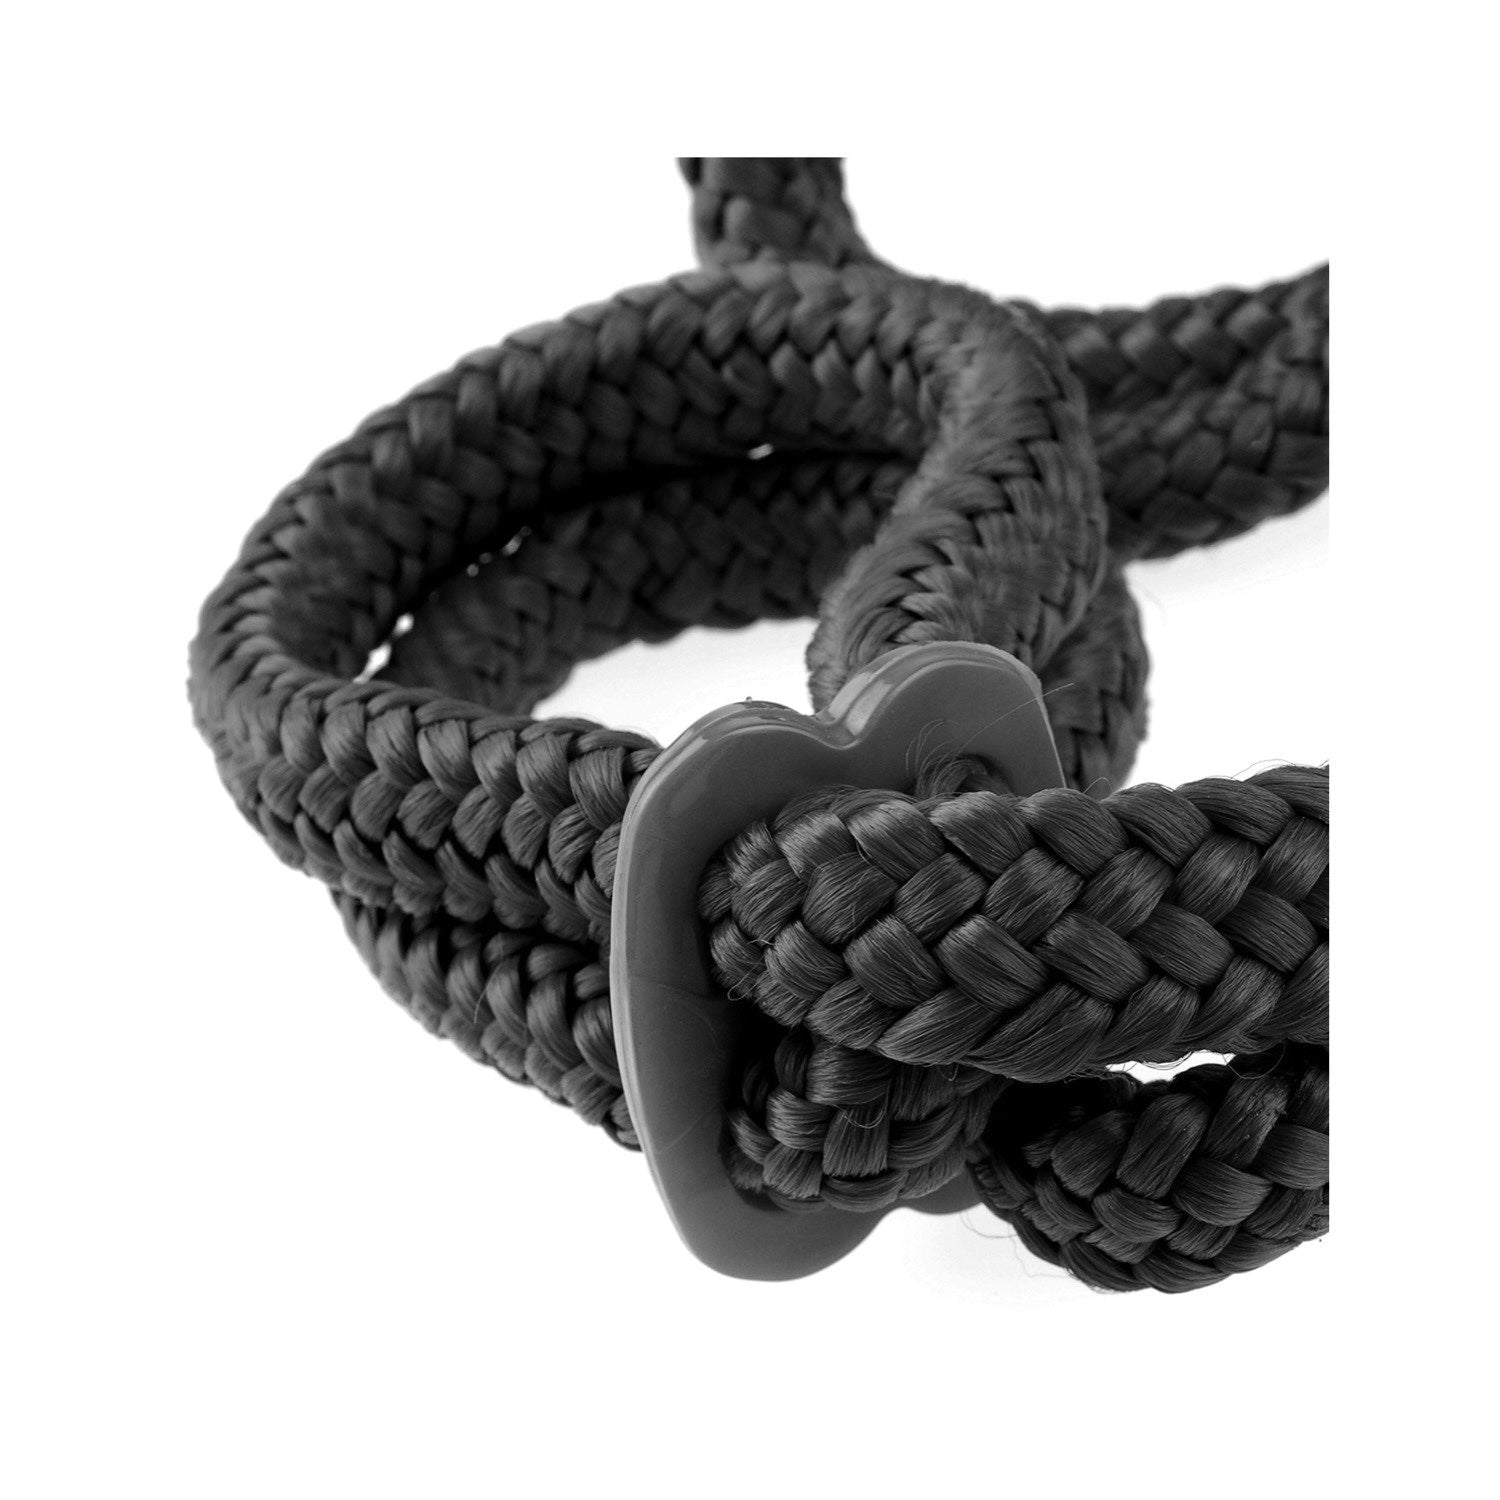 Fetish Fantasy Series Silk Rope Love Cuffs - Black Restraints by Pipedream